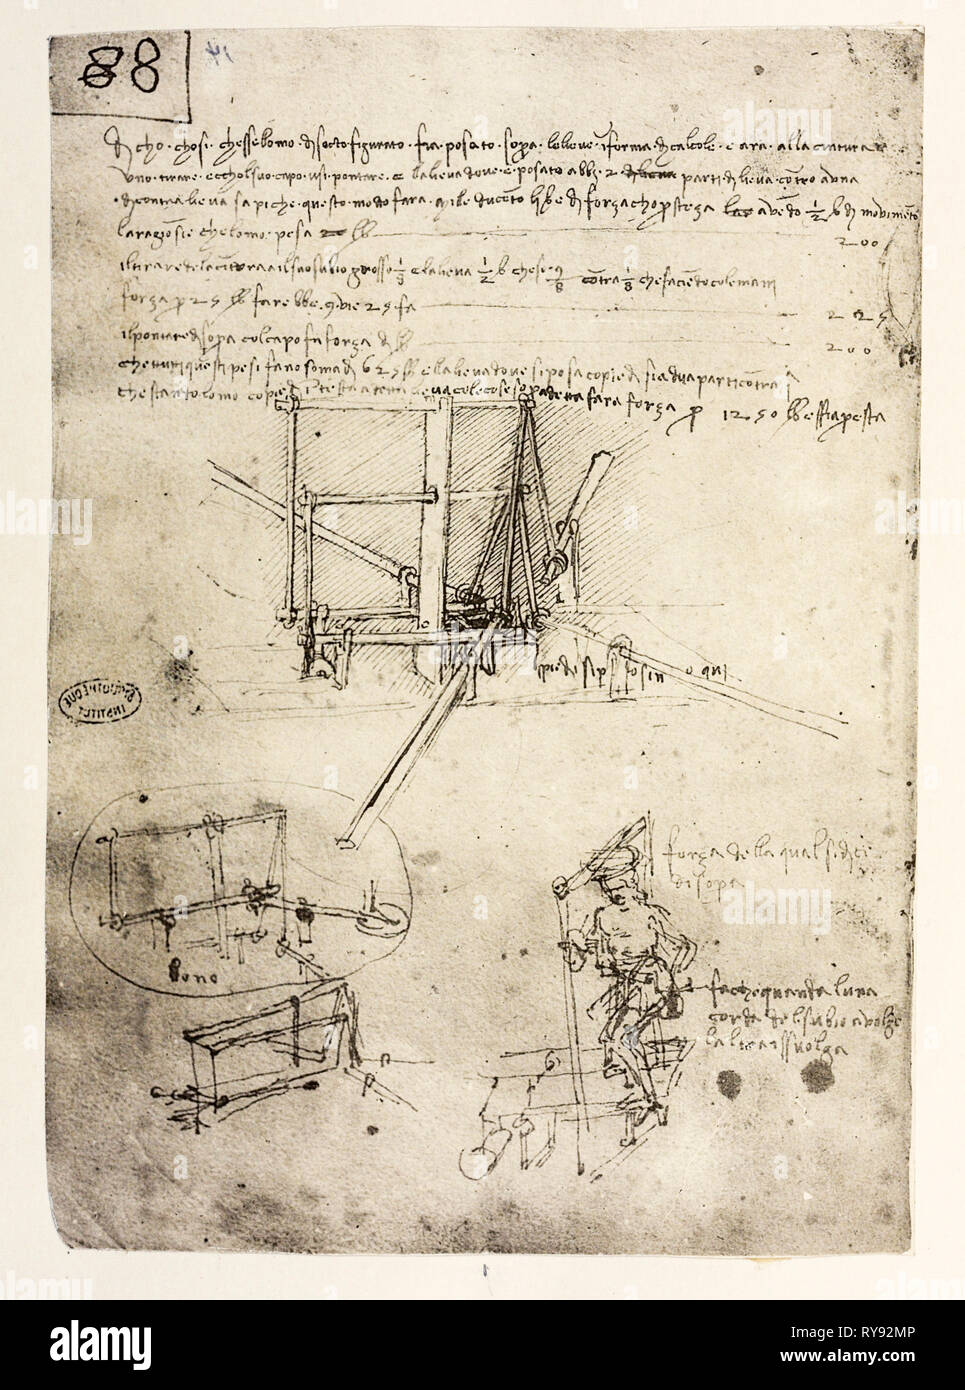 Leonardo da Vinci flying machine design, related to his studies on artificial flight. Stock Photo